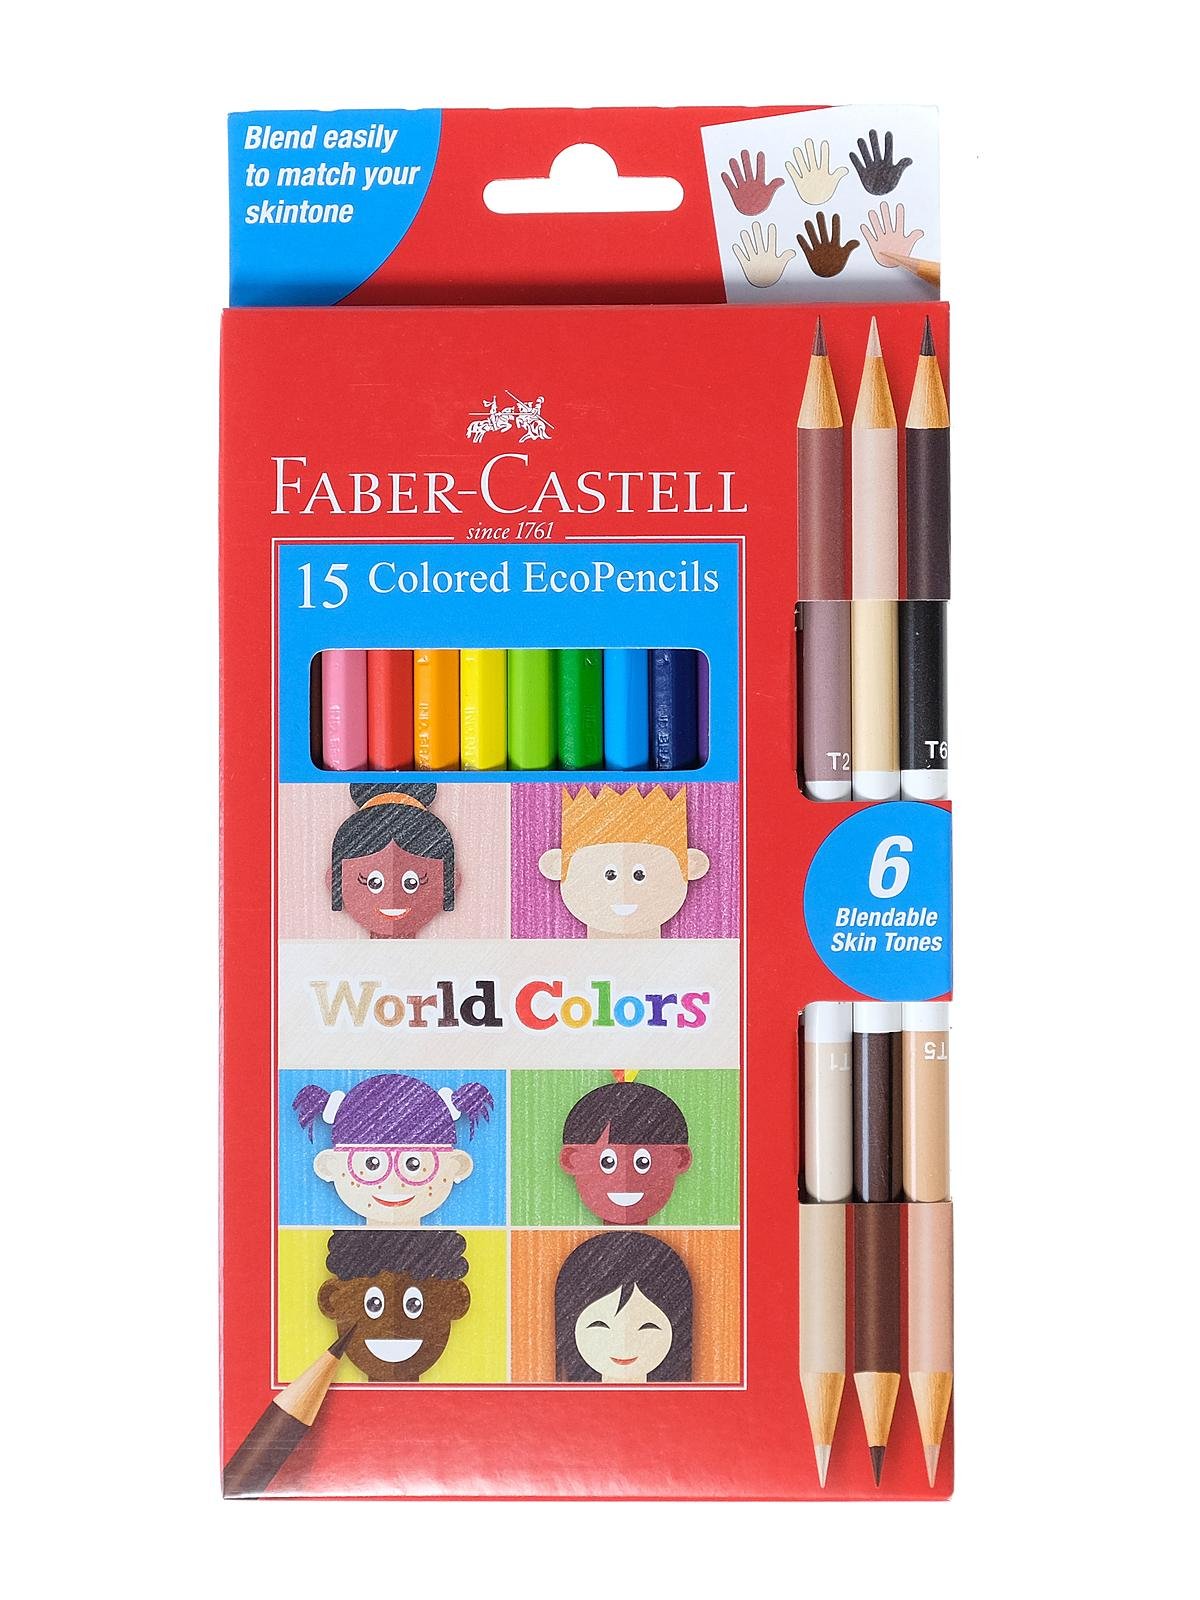 Faber-Castell - World Colors EcoPencils